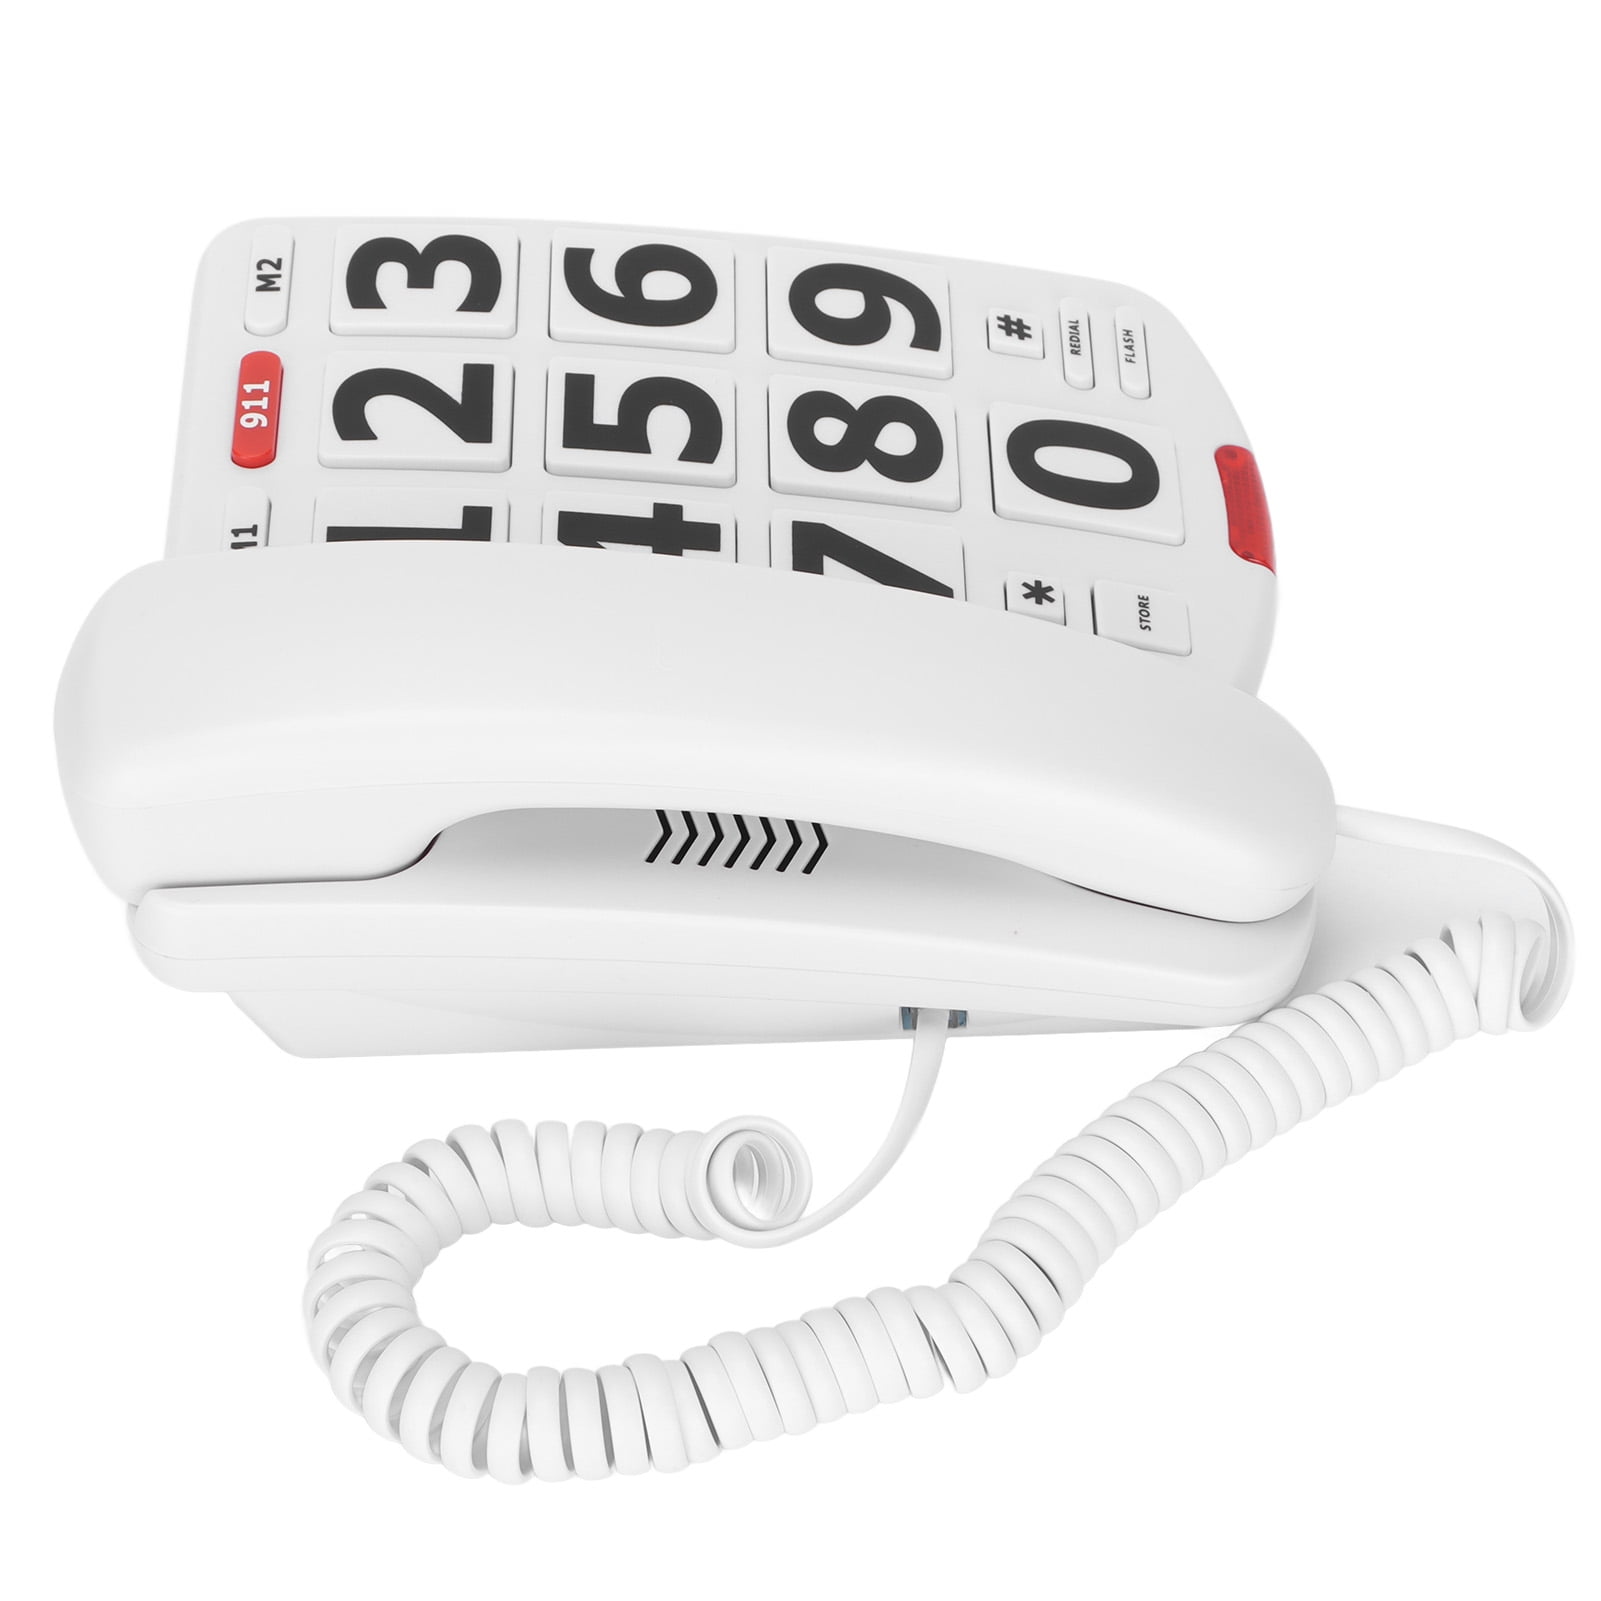 big button telephone for seniors